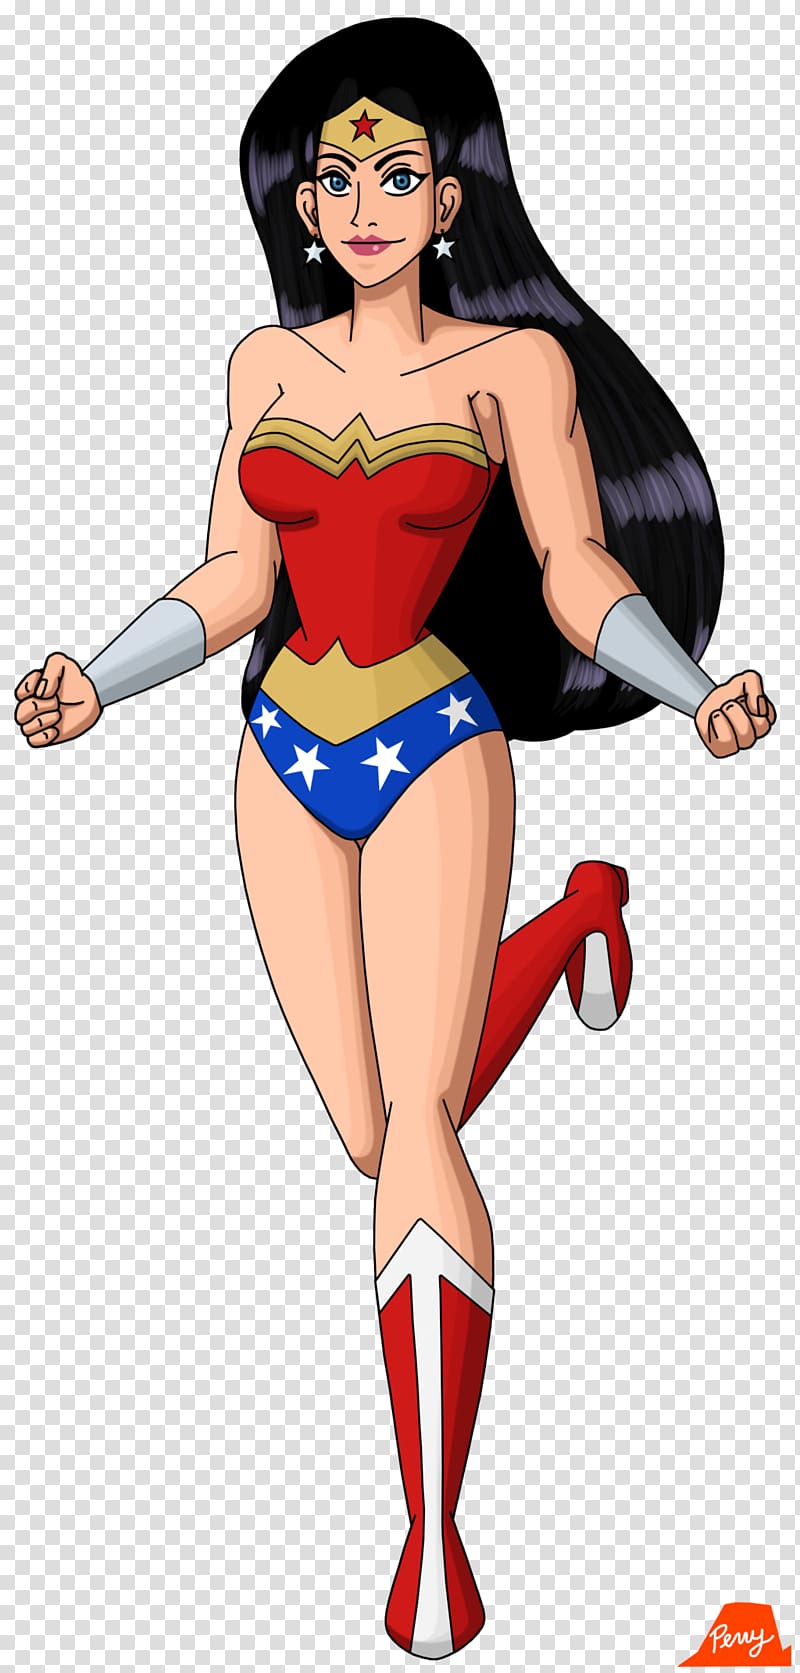 Diana Prince Superman Wonder Woman Cartoon Superhero, Wonder Woman transparent background PNG clipart